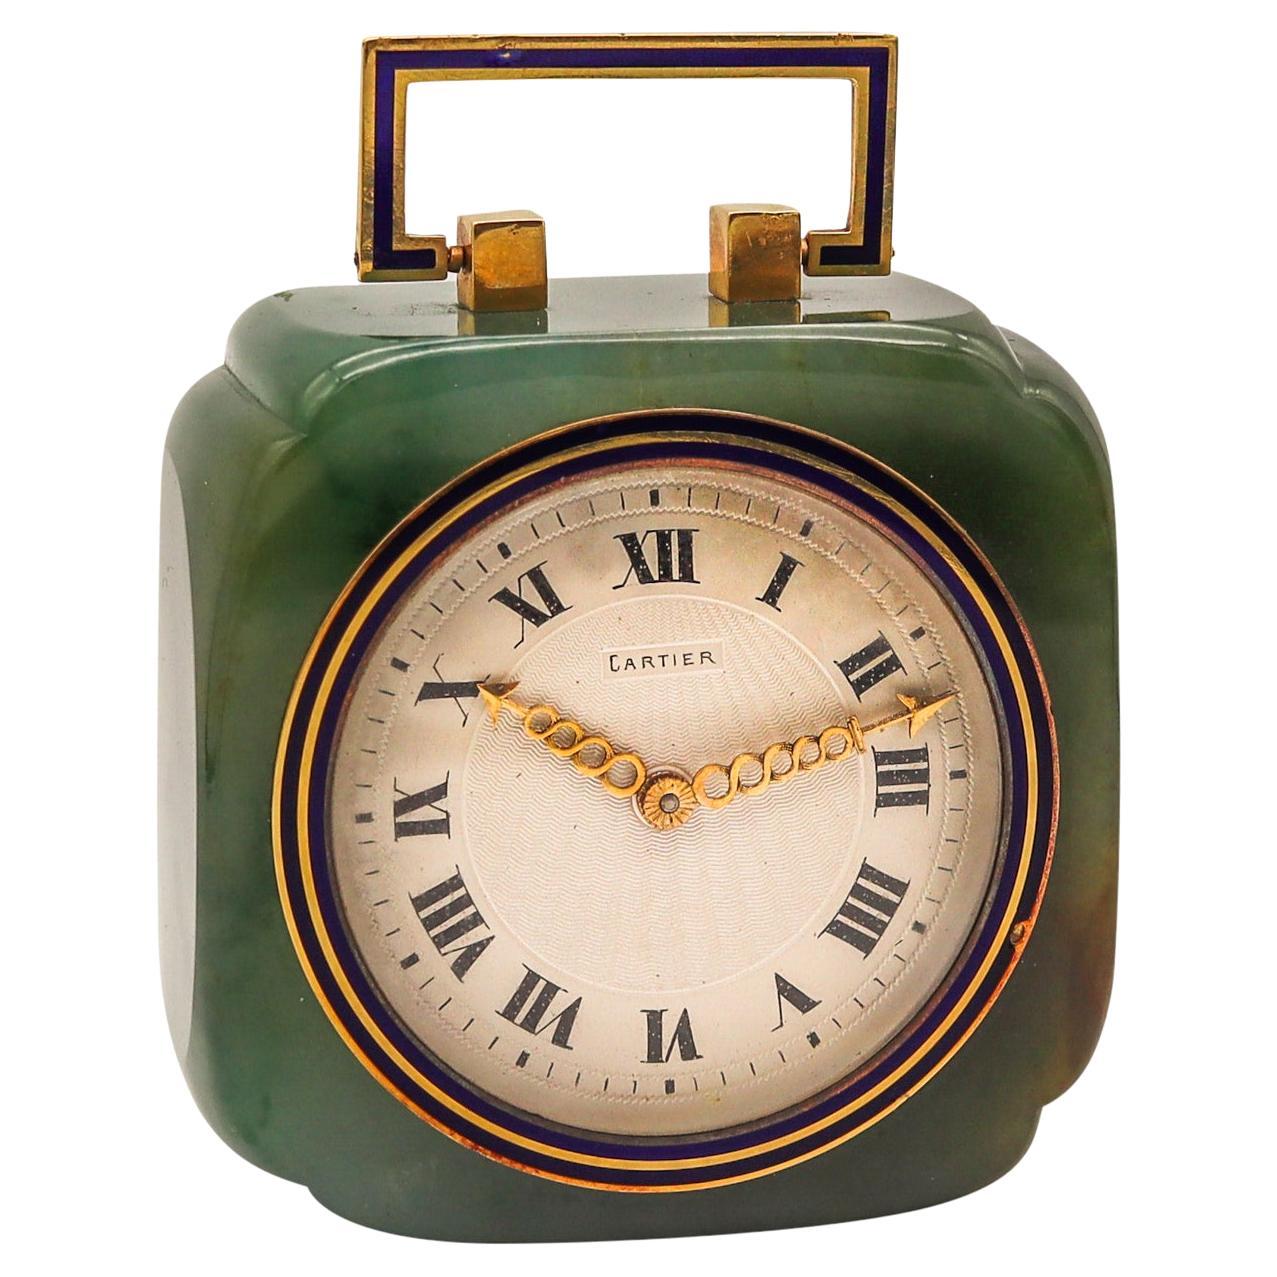 Cartier Paris 1920 Art Deco Chinoiserie 18kt Desk Clock in Nephrite Jade Enamel For Sale